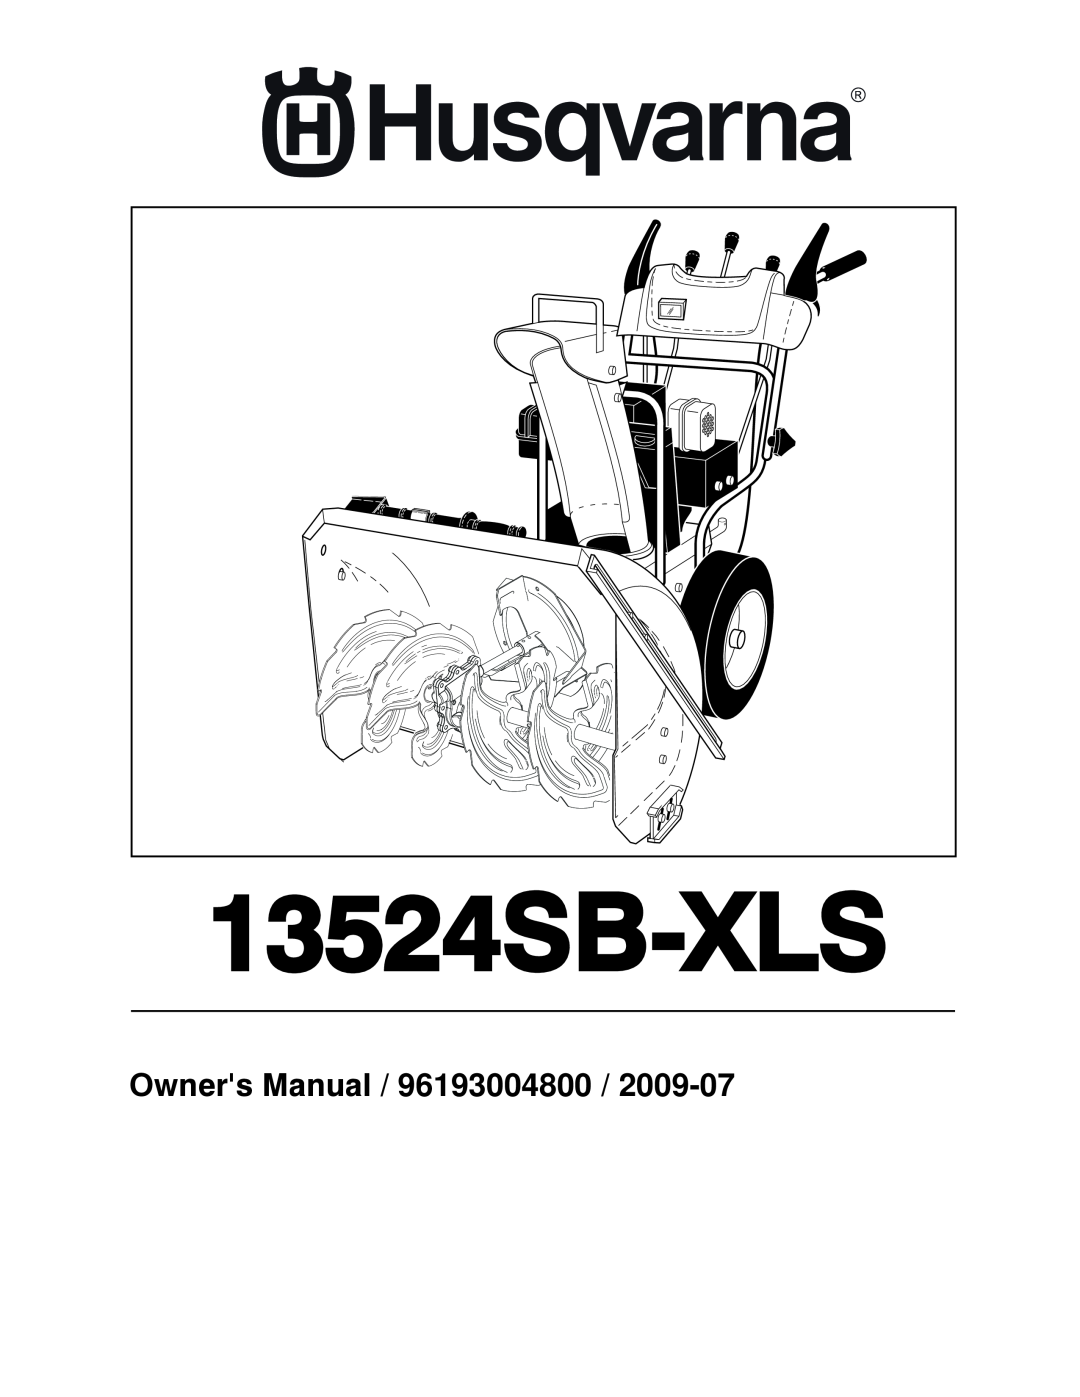 Husqvarna 13524SB-XLS owner manual 